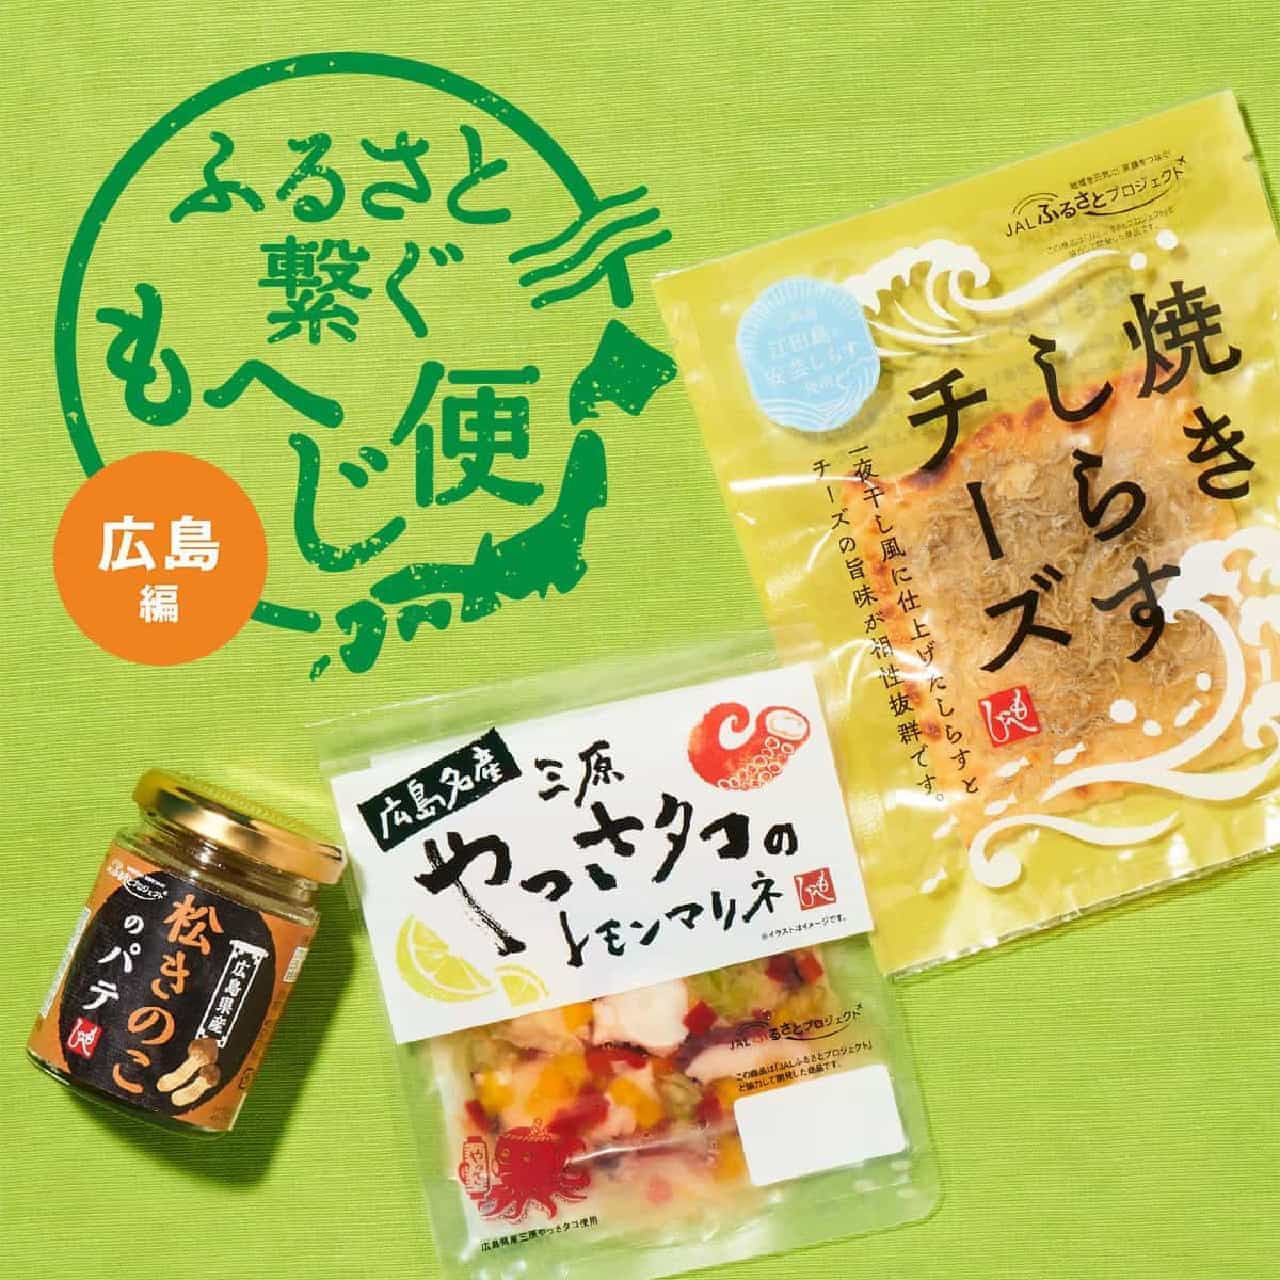 KALDI x JAL Furusato Project "Grilled Shirasu Cheese" "Pine Mushroom Pate" "Mihara Yassa Octopus Lemon Marinated"